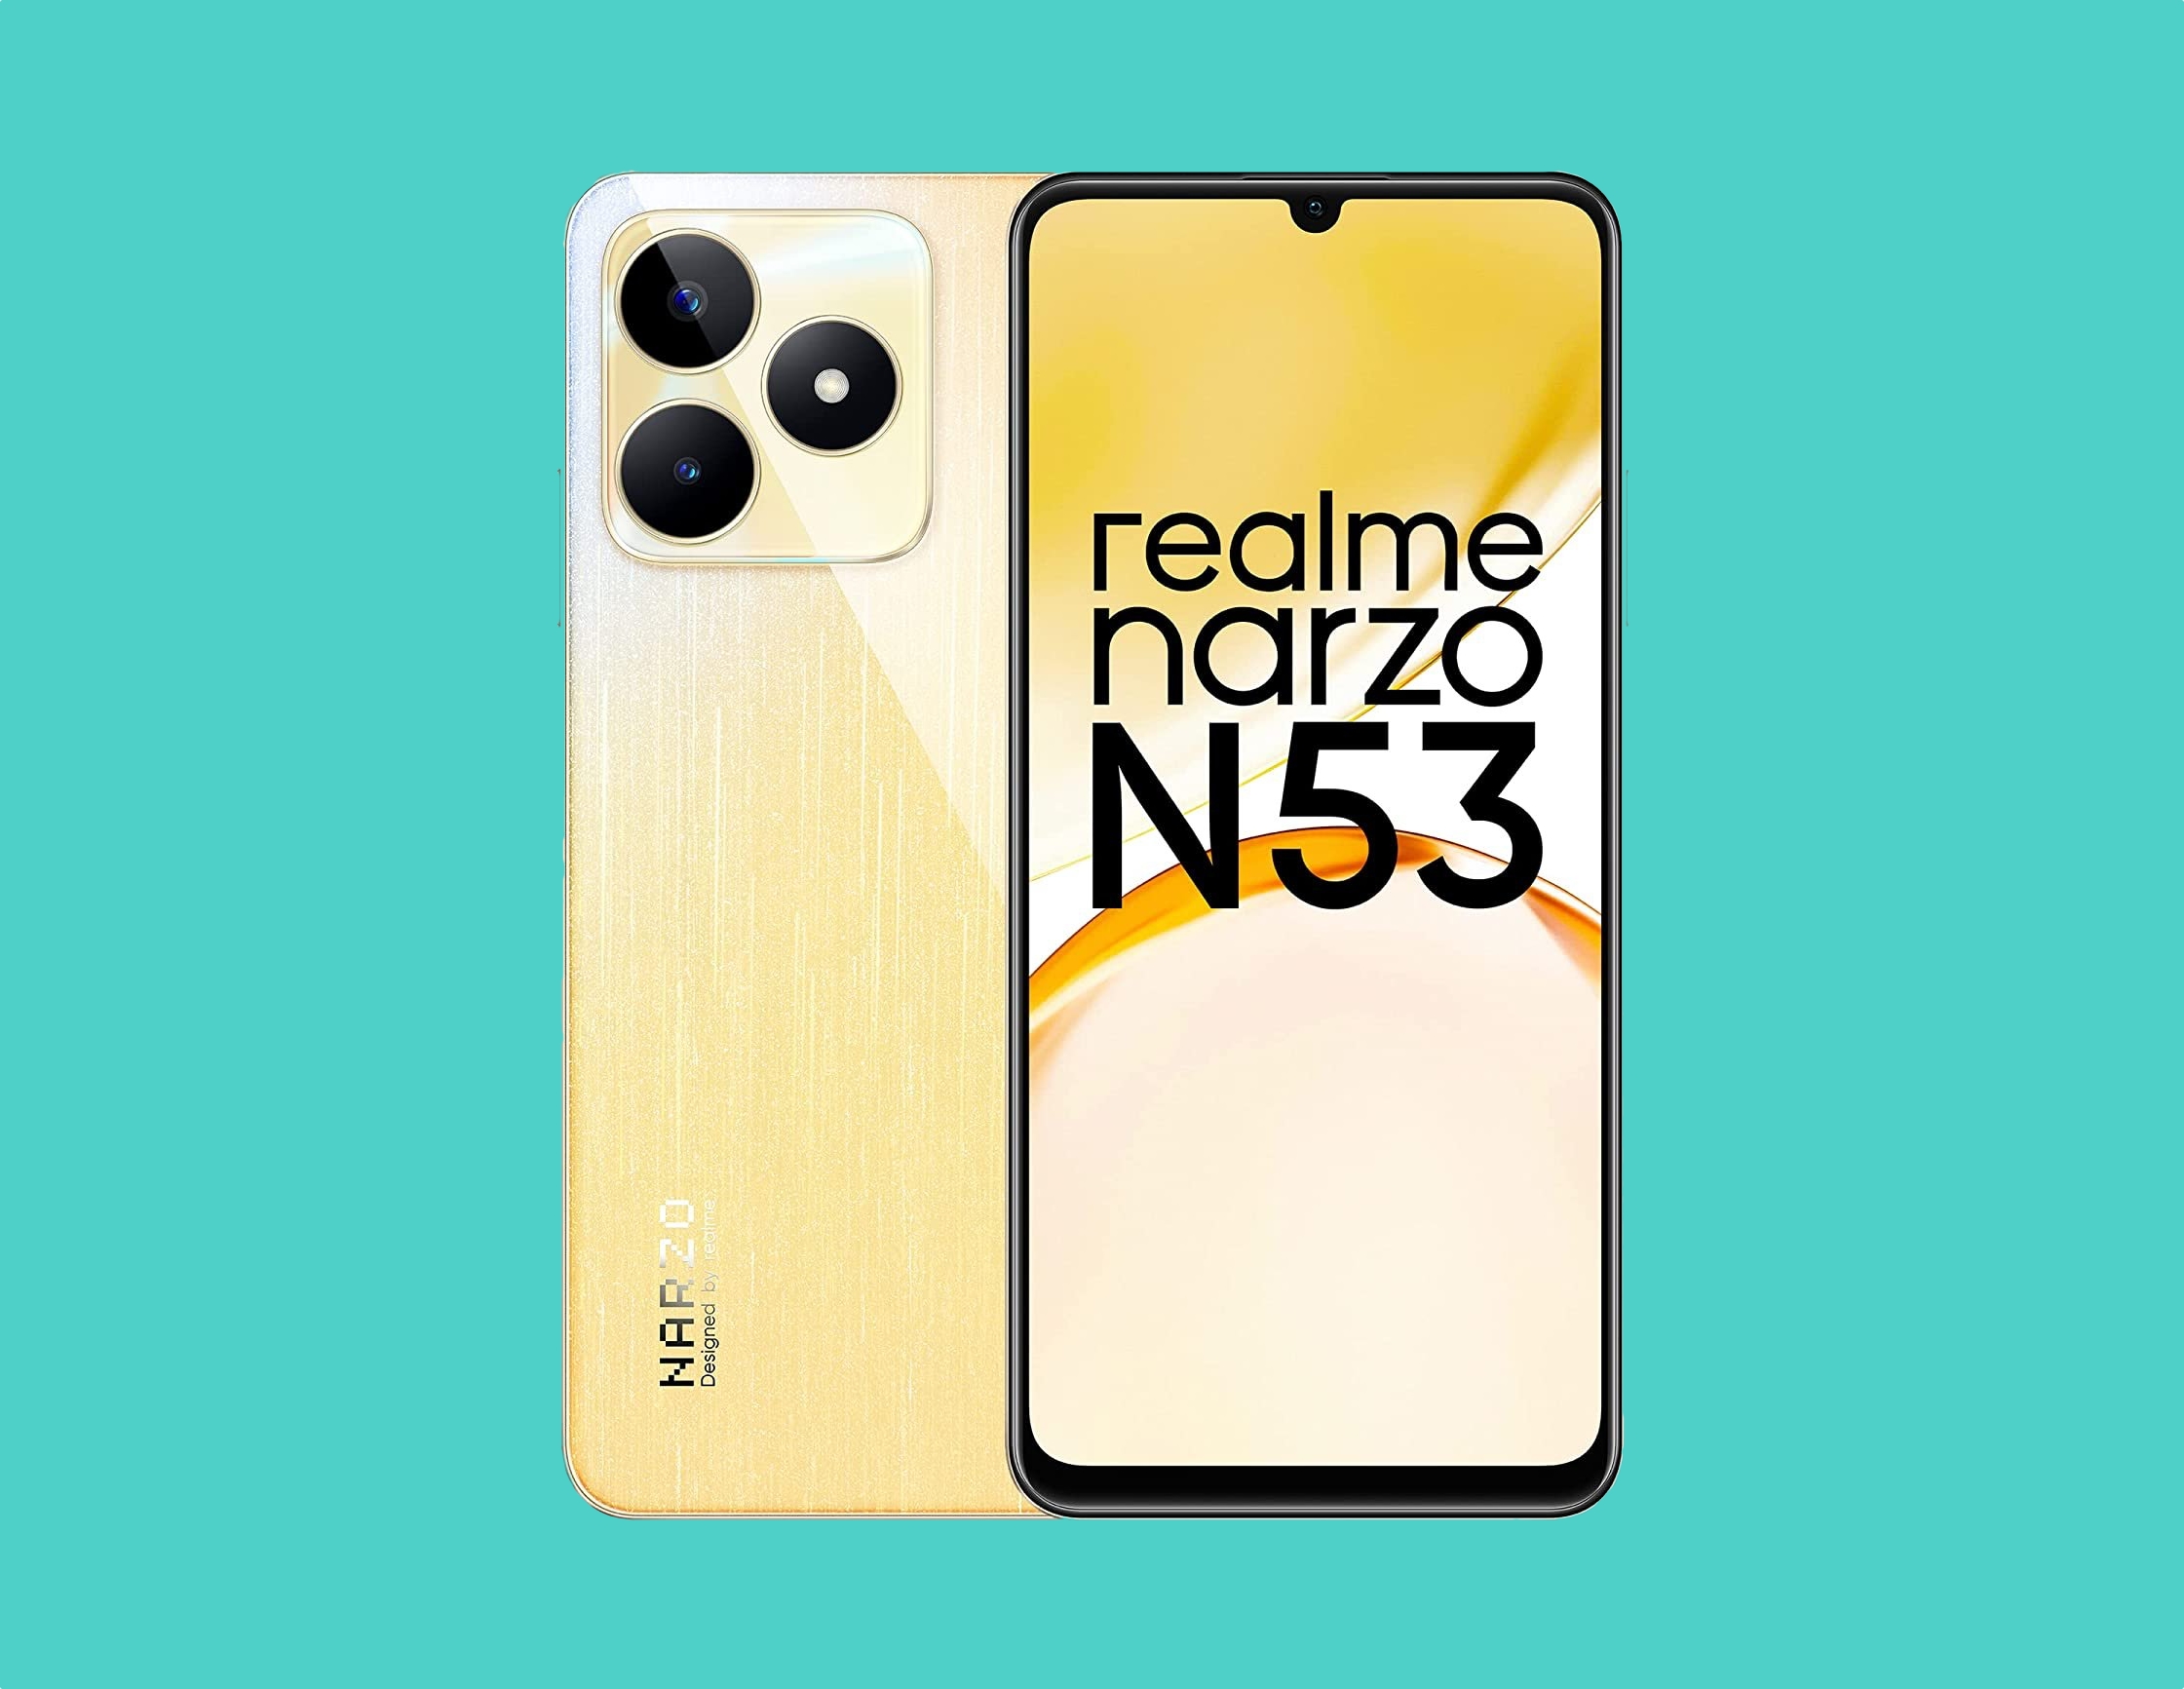 realme narzo N53: LCD-дисплей на 90 Гц, чип Unisoc T612 і батарея на 5000 мАг за $109